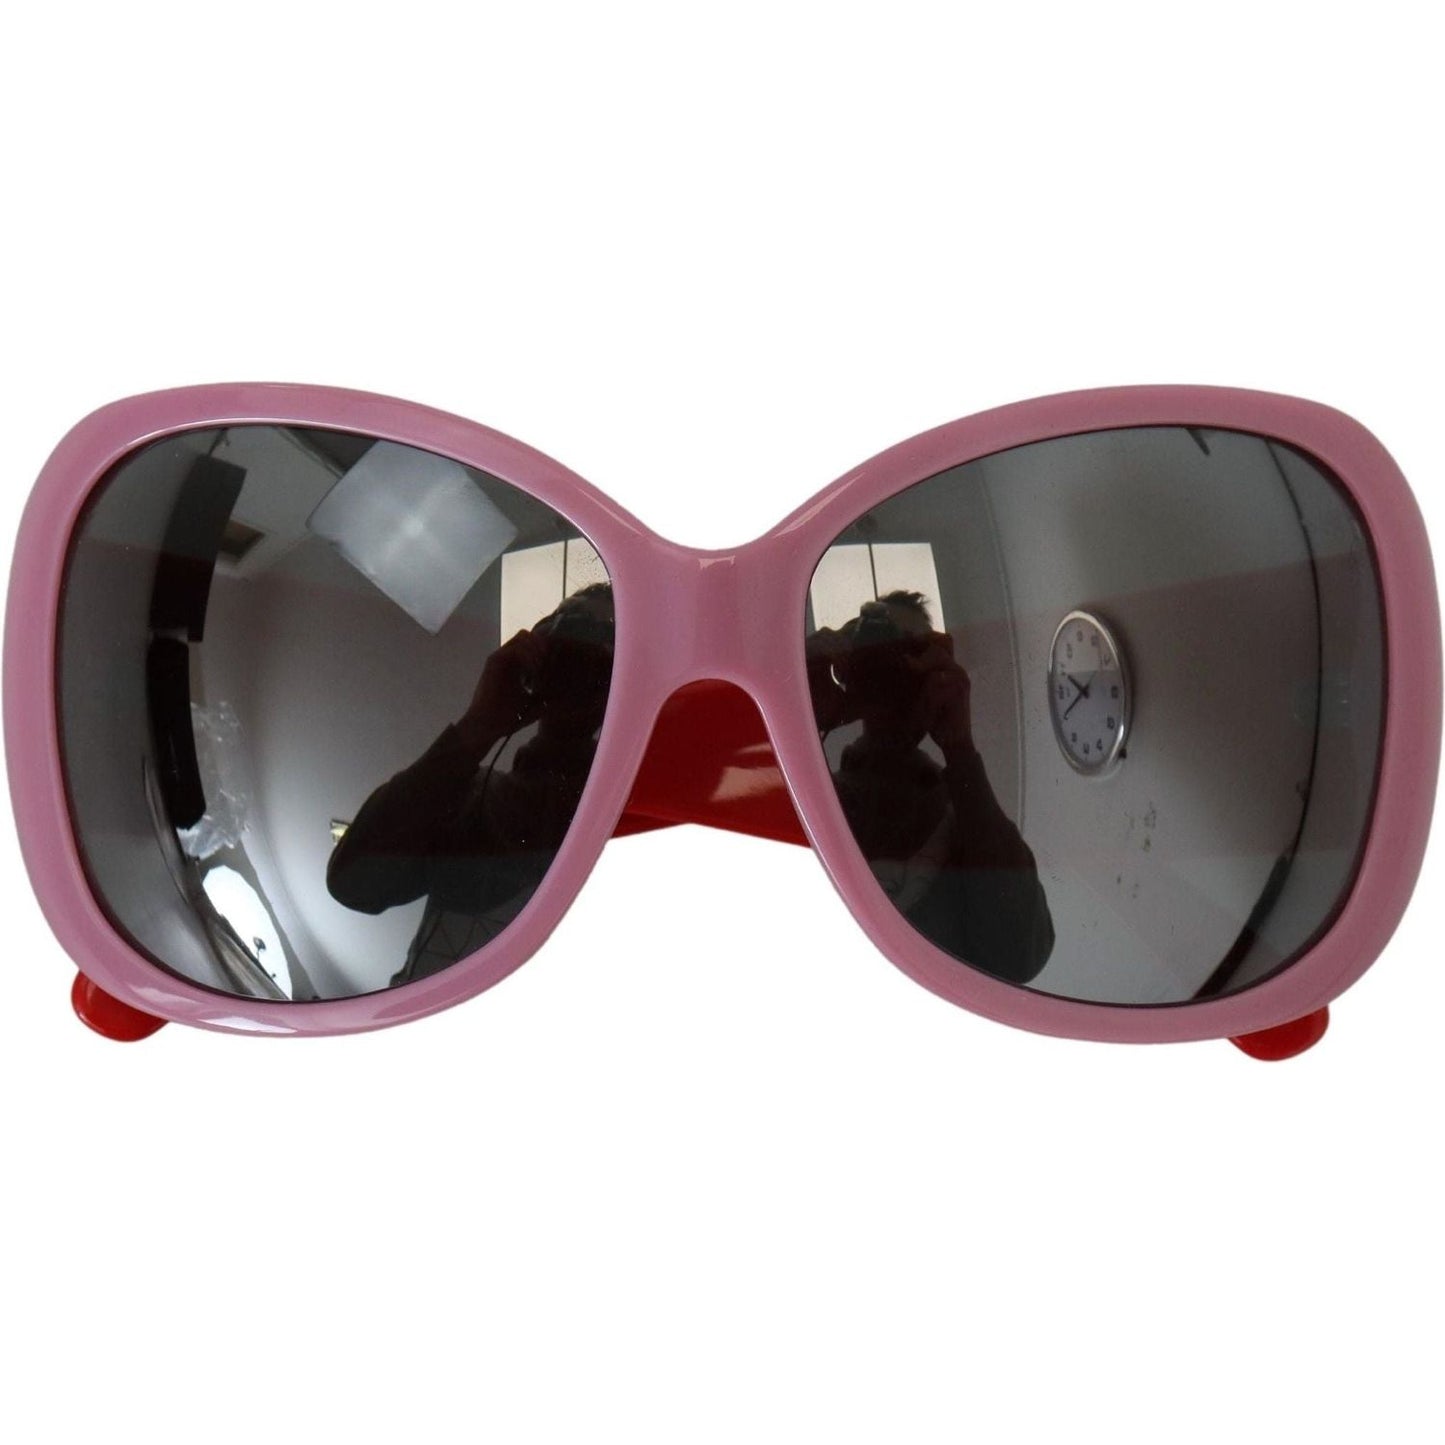 Dolce & Gabbana Chic Oversized UV-Protection Sunglasses pink-red-plastic-frame-oversized-dg4033-sunglasses IMG_4791-42949c58-417.jpg